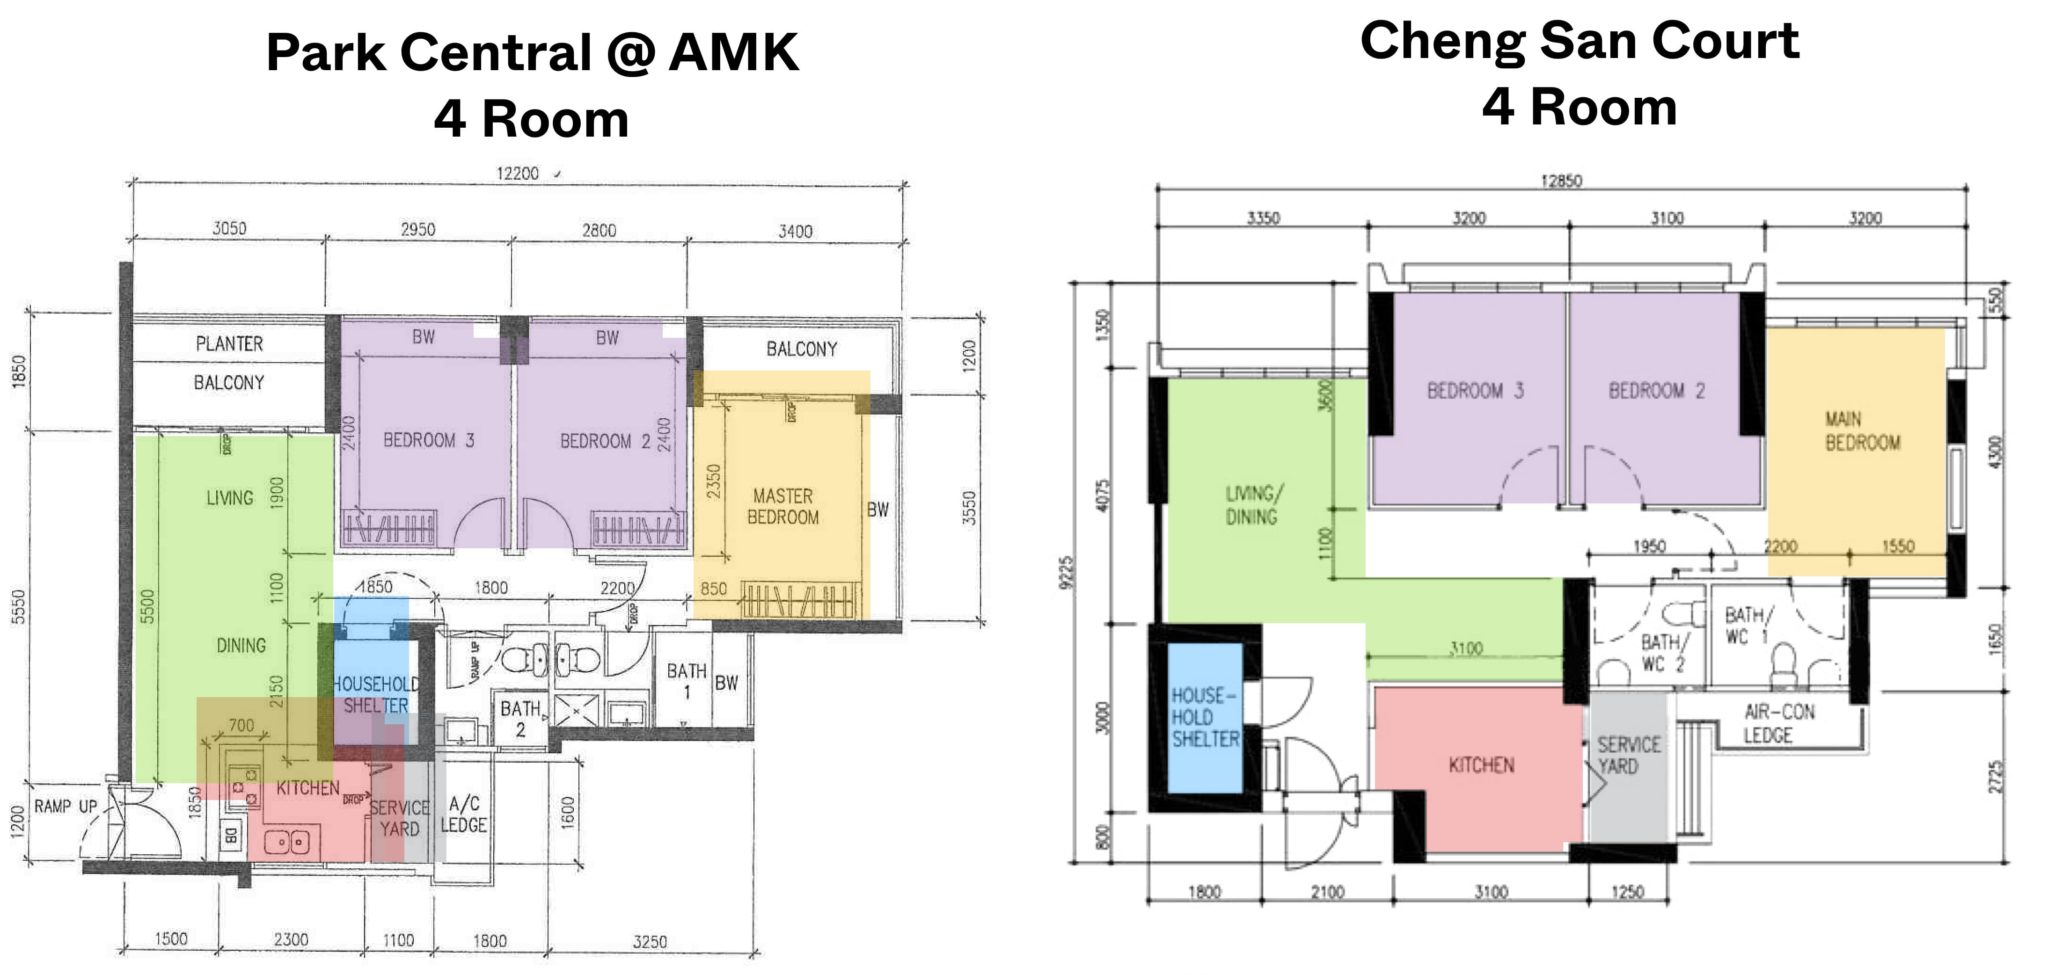 Park Central AMK vs Cheng San Court Floor Plan